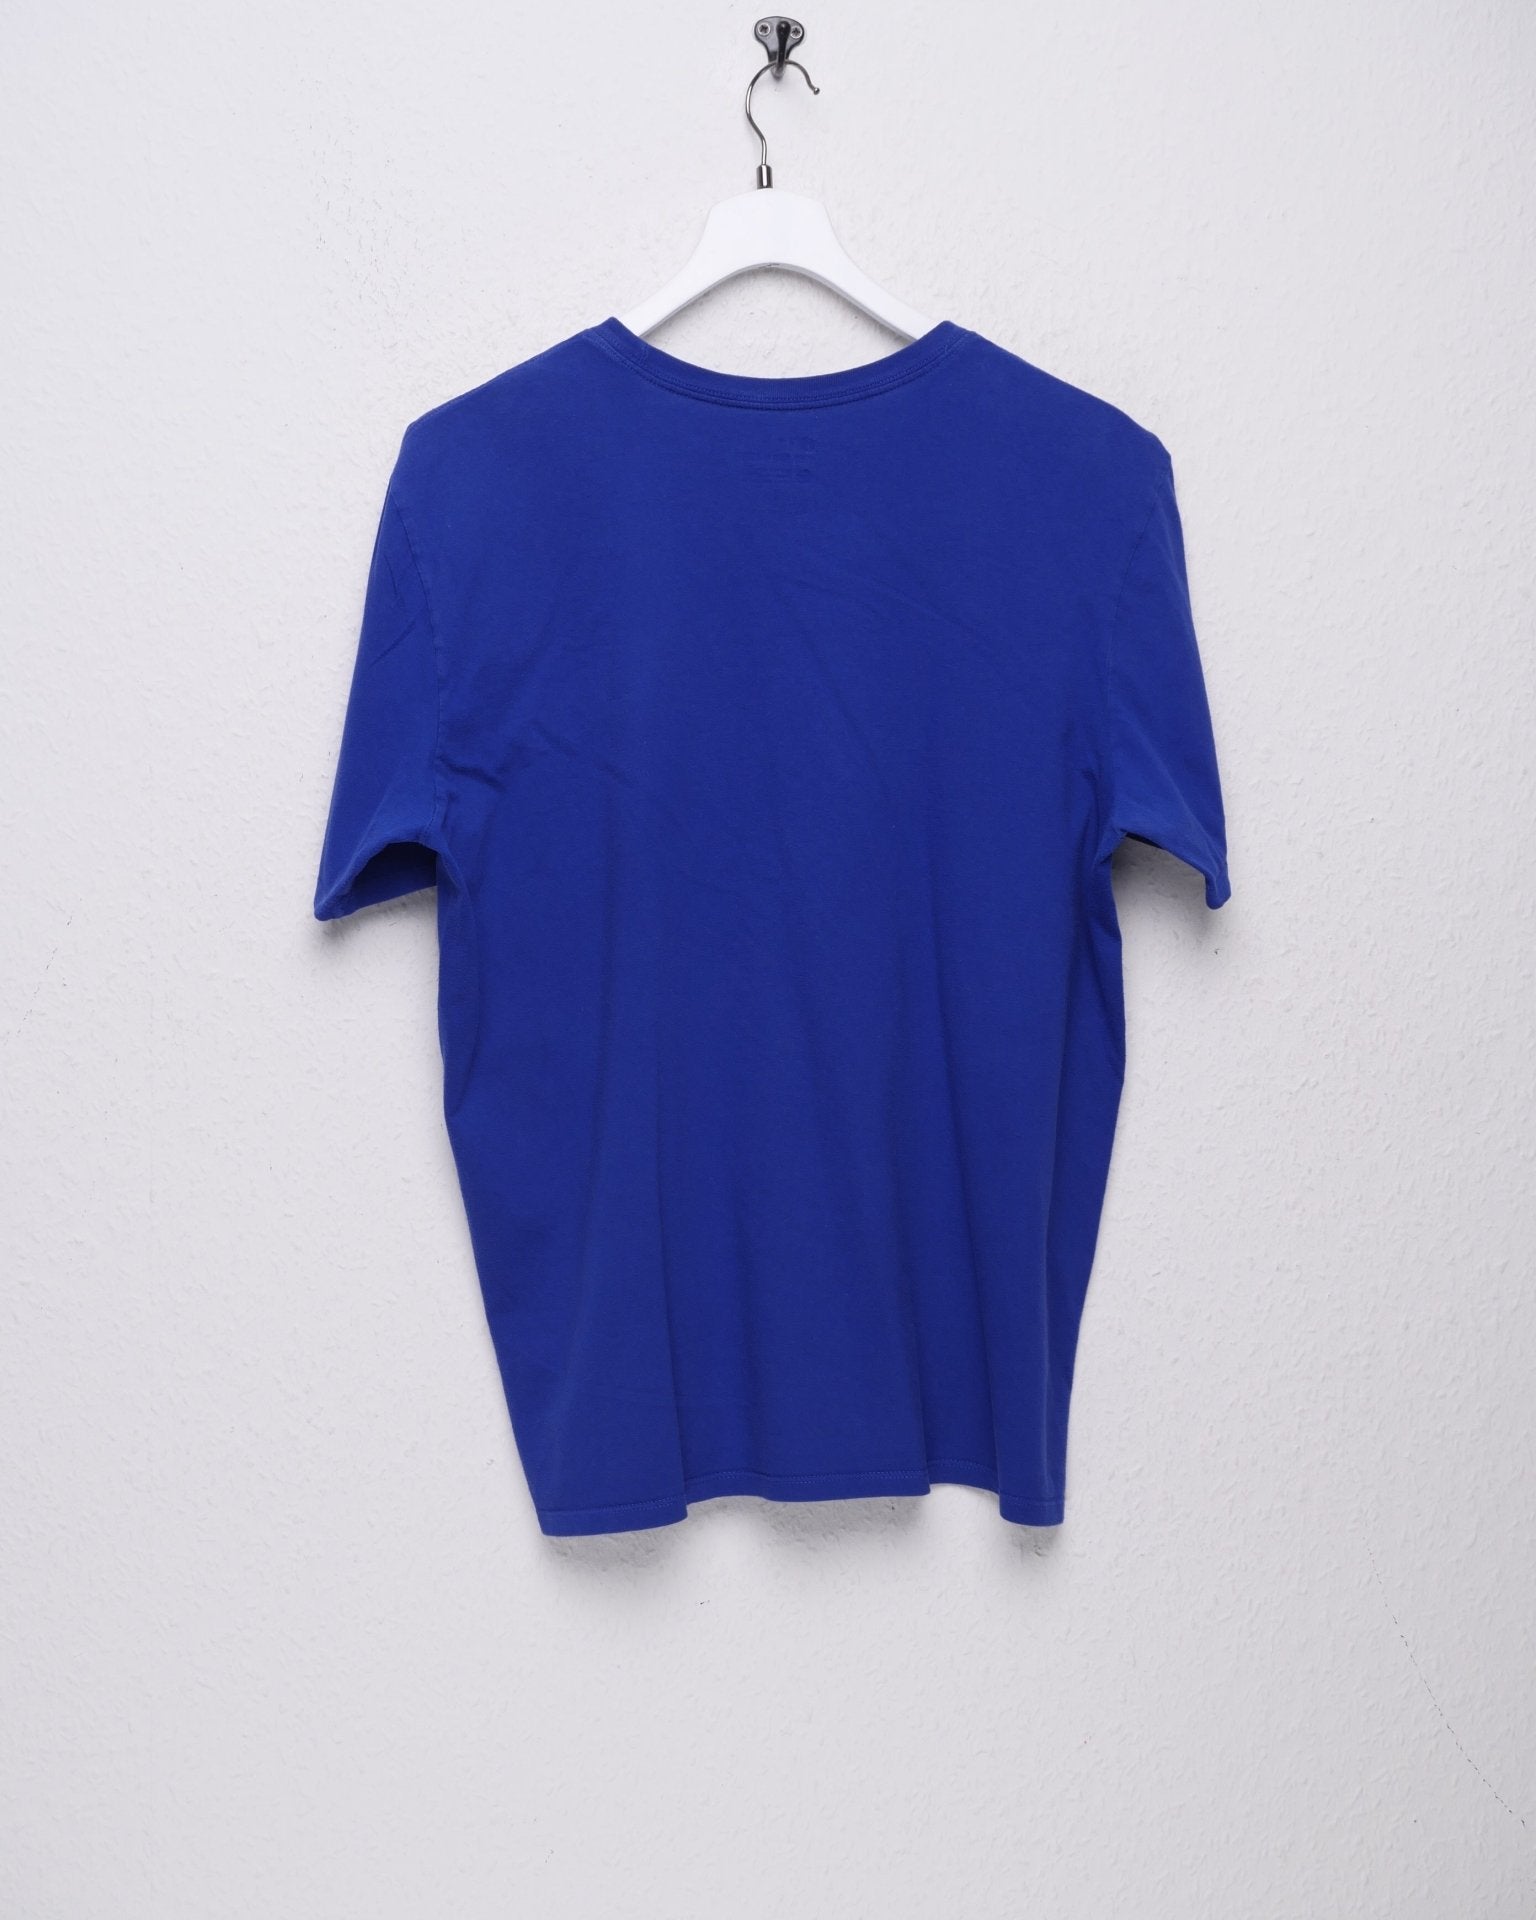 Nike printed Logo washed blue Shirt - Peeces